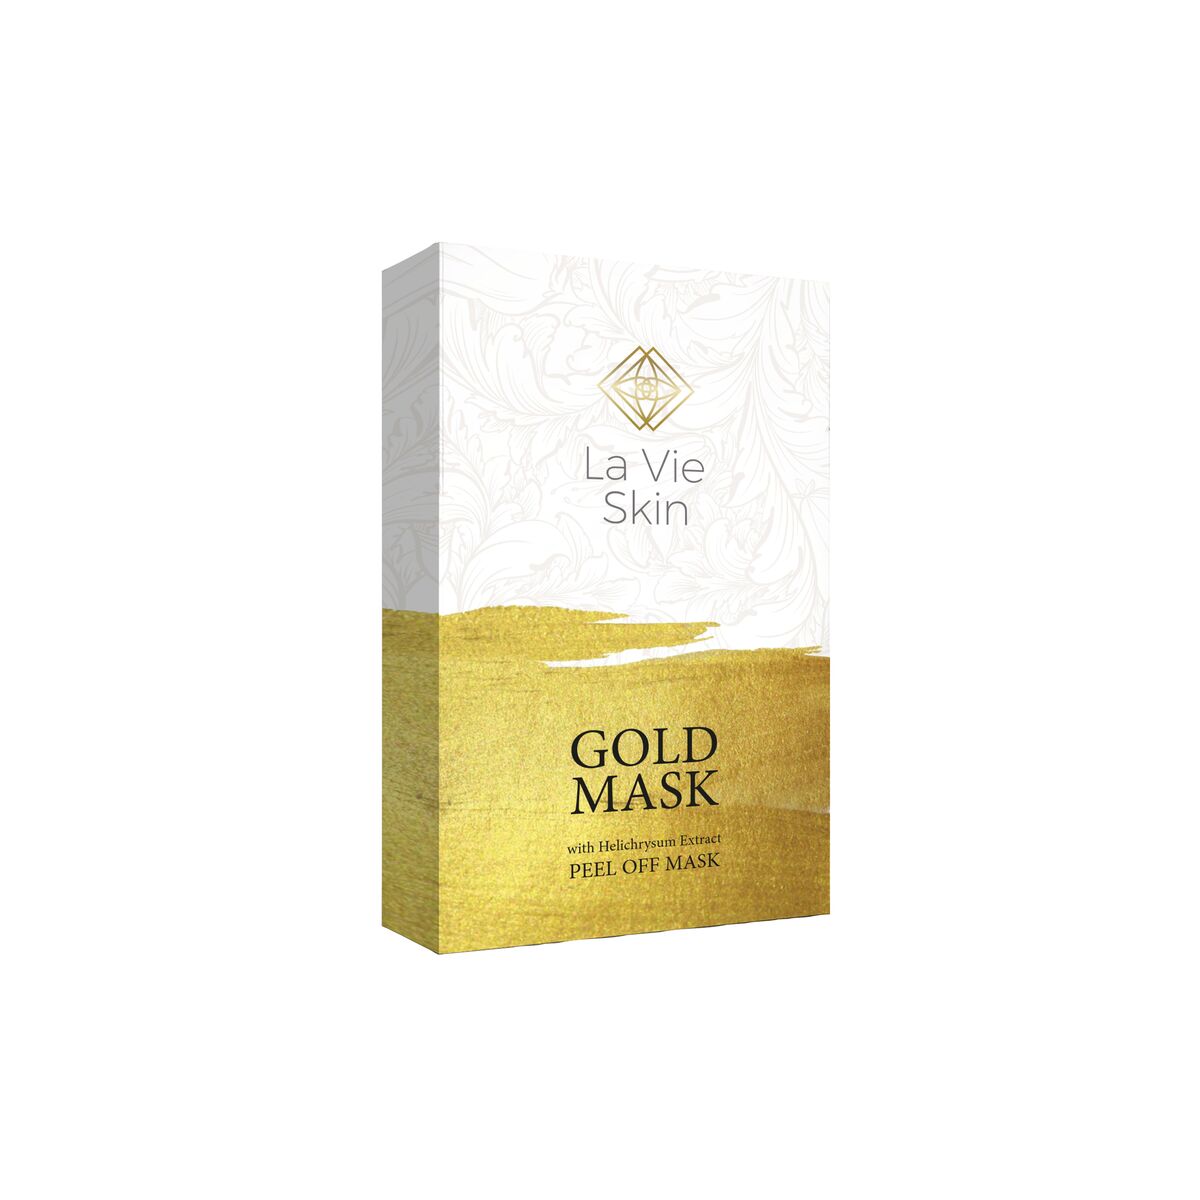 24k GOLD MASK – moisturizing and brightening